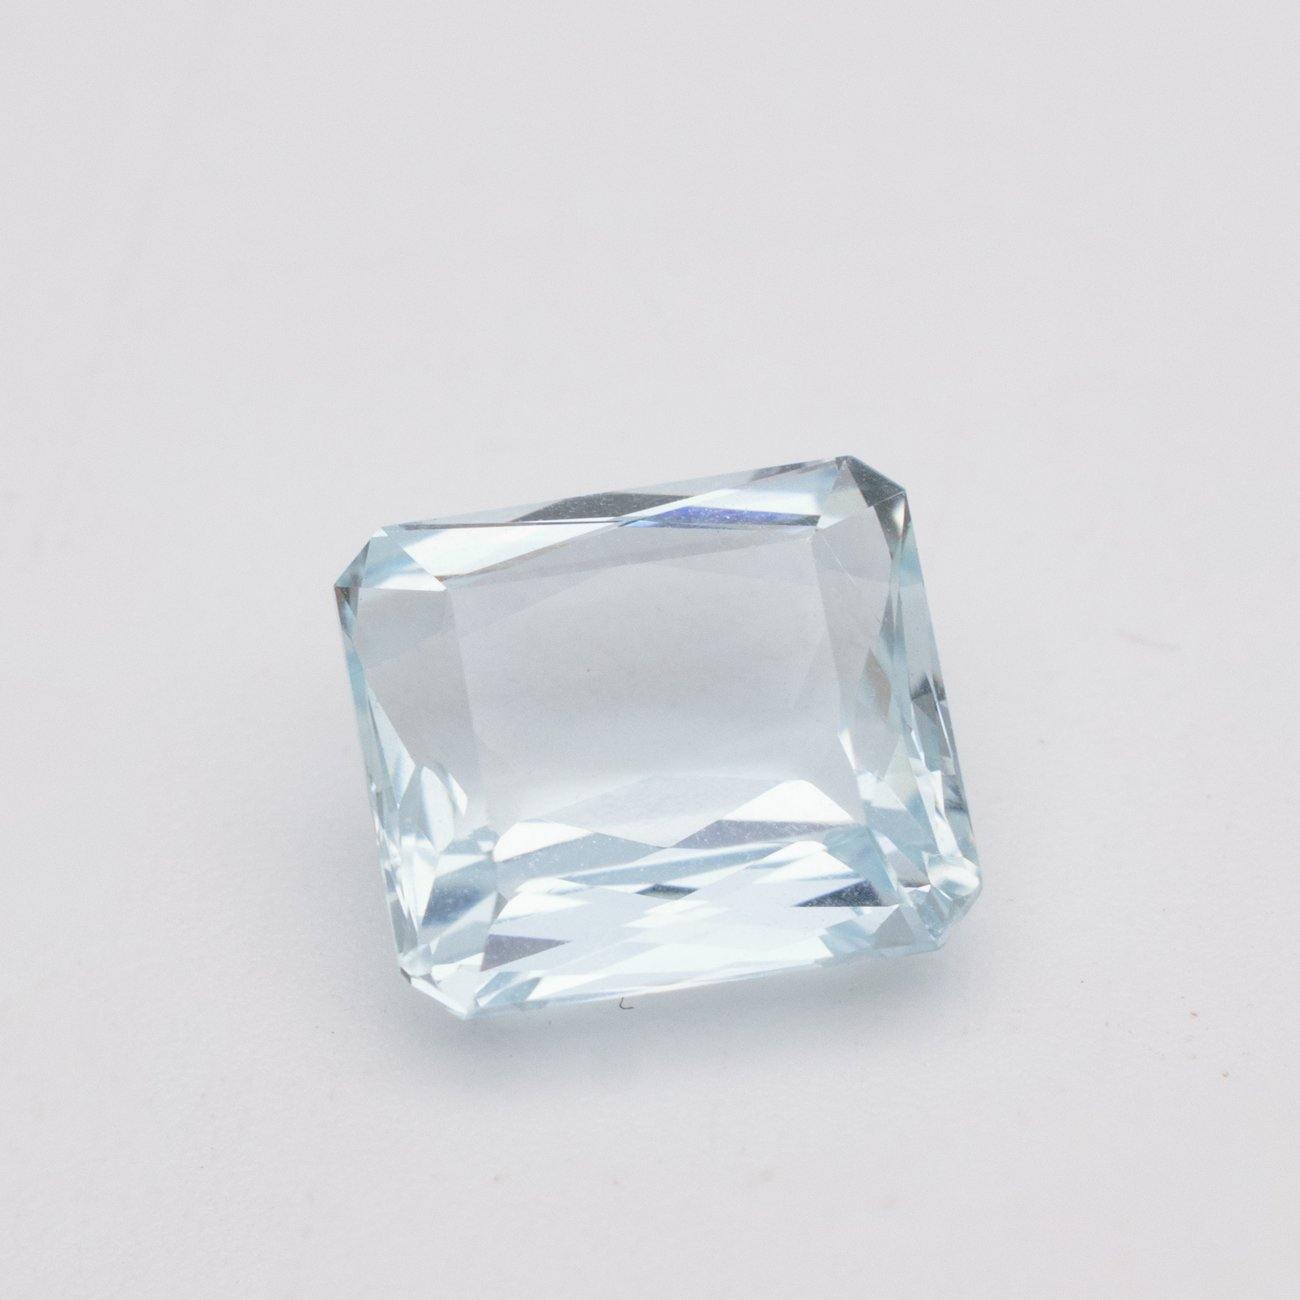 2.21 Carats Natural Aquamarine Emerald Cut Loose Gemstone - Modern Gem Jewelry 